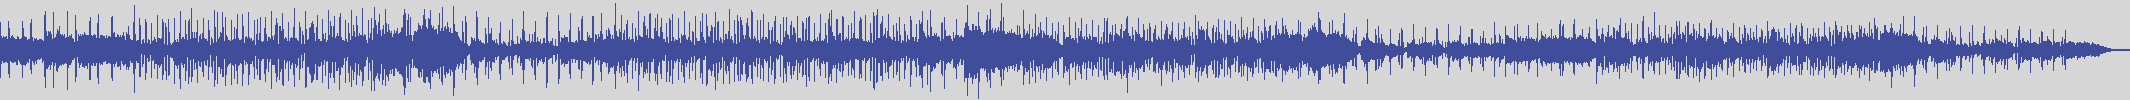 digiphonic_records [DPR013] Little Tony - Profumo Di Mare ( the Love Boat ) [Original Mix] audio wave form